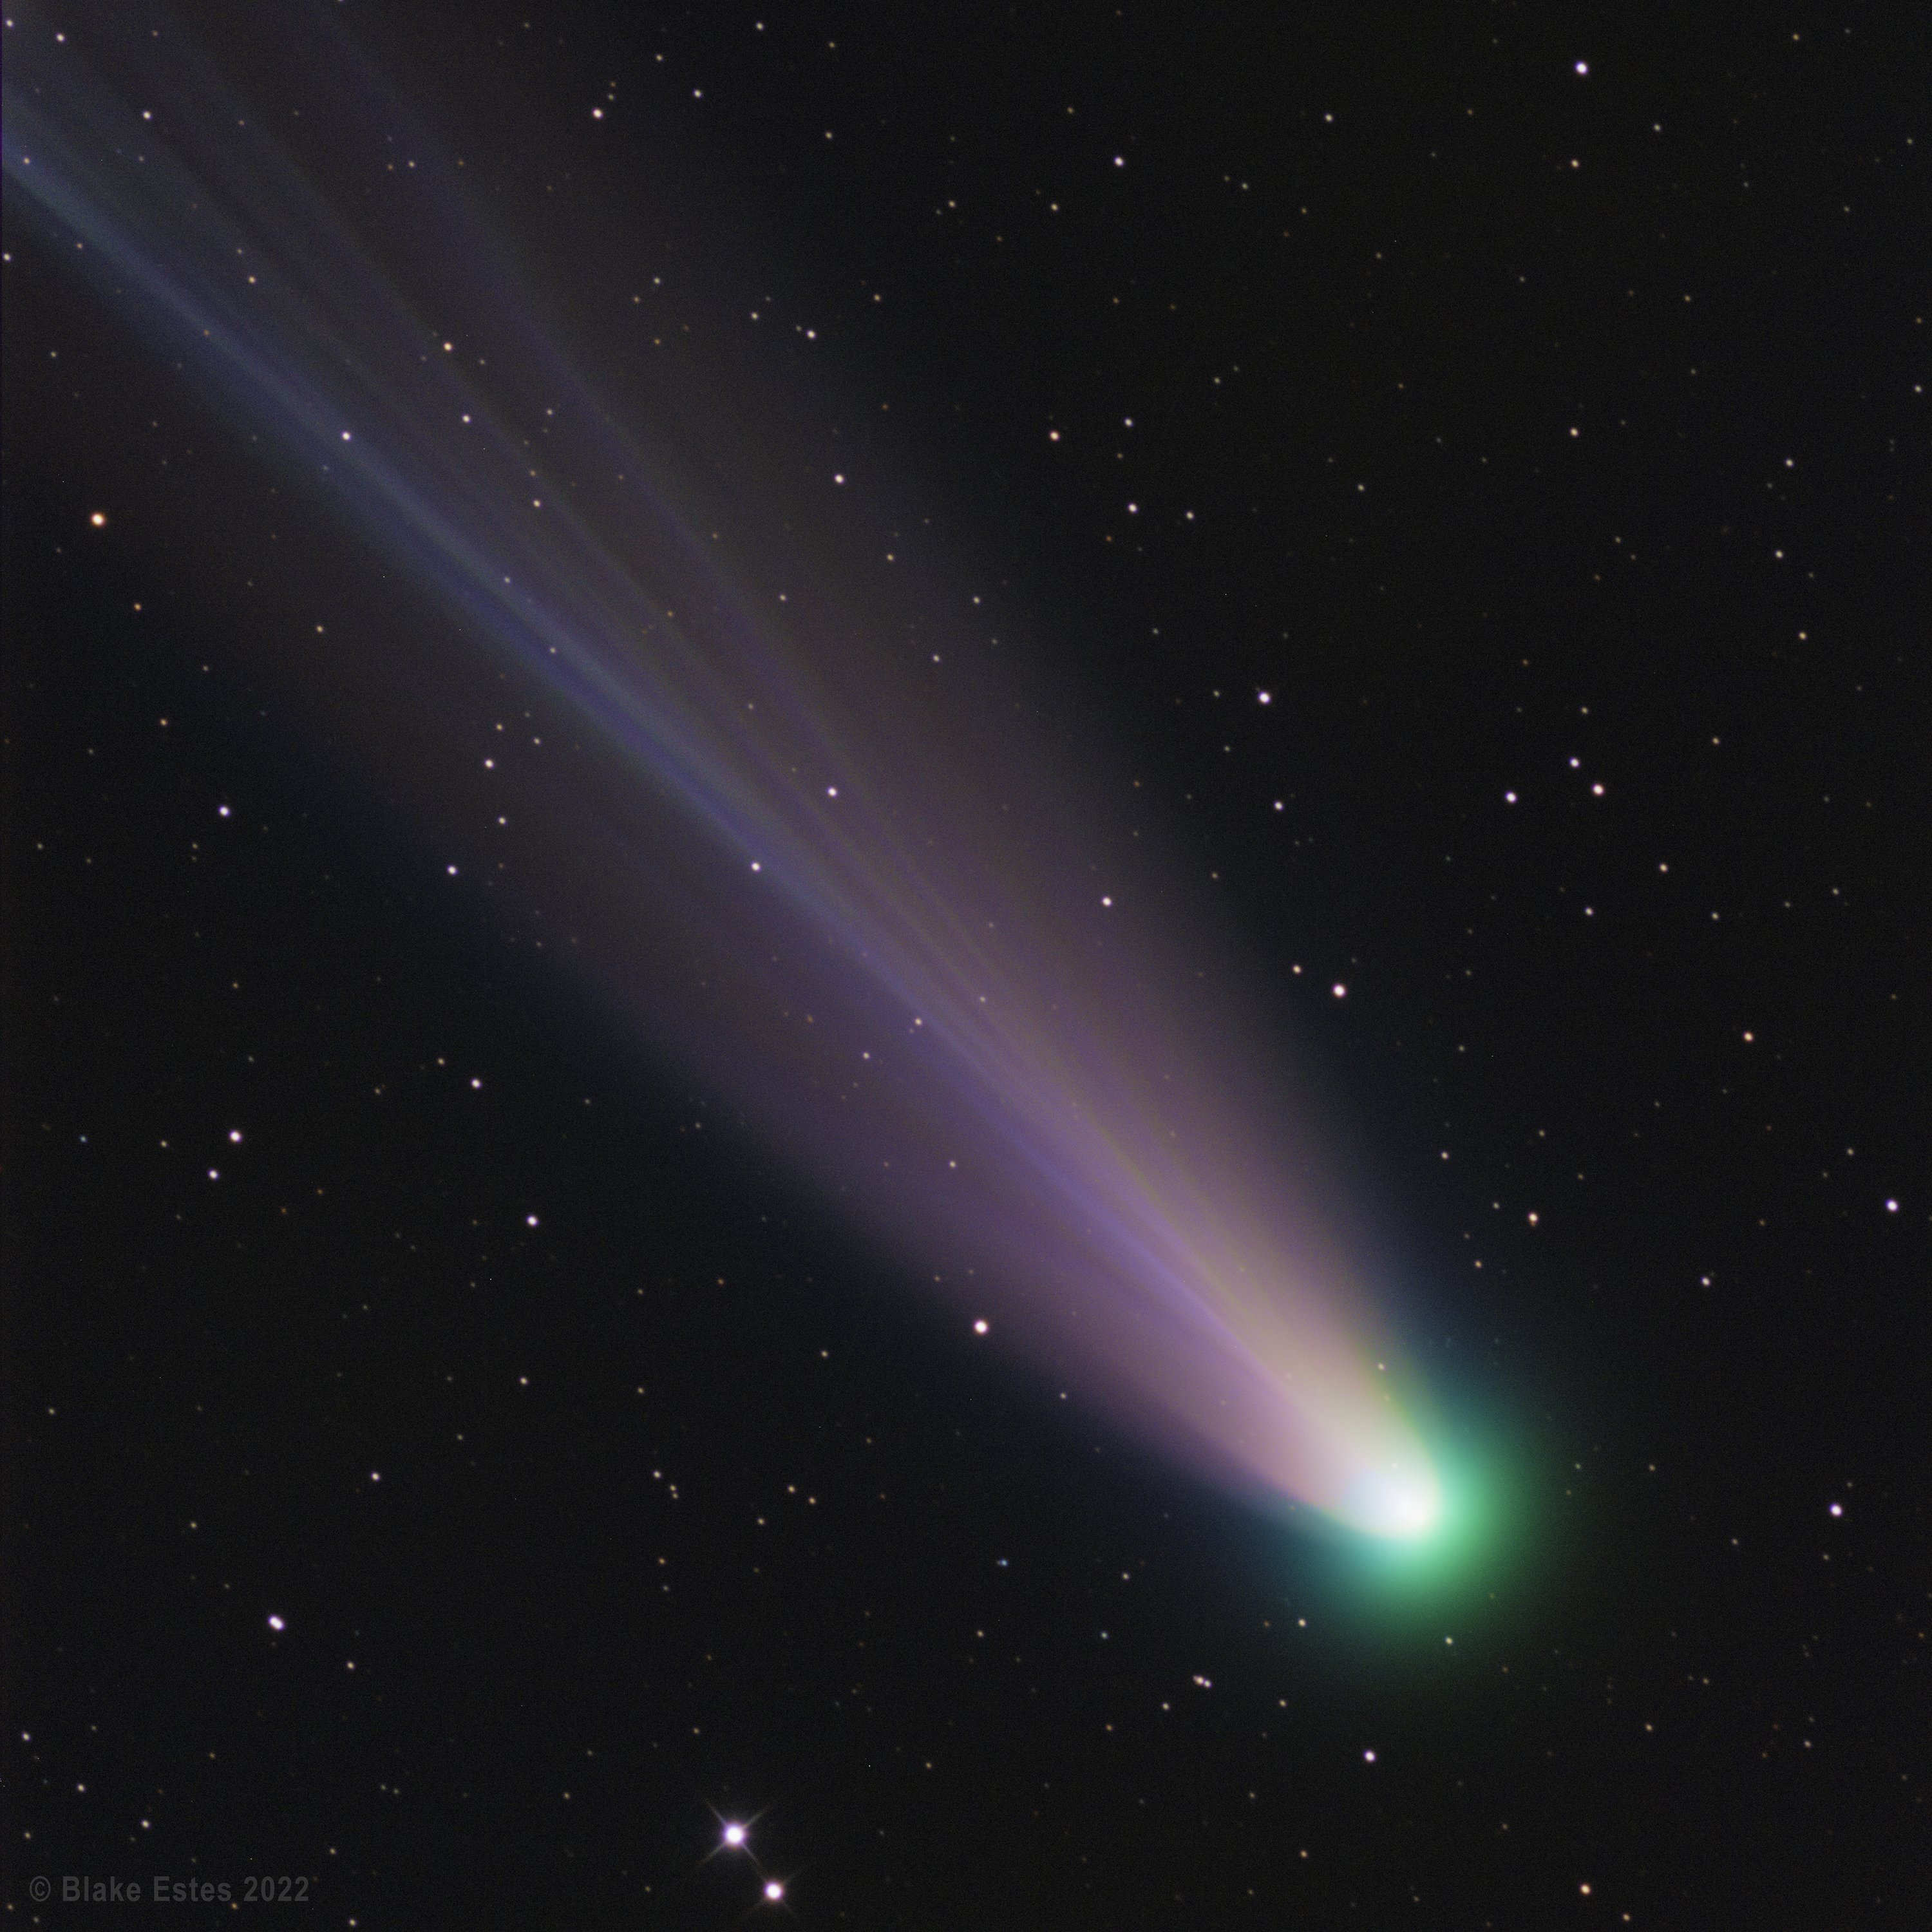 Comet Calendar 2022 Apod: 2022 January 12 - Comet Leonard Closeup From Australia